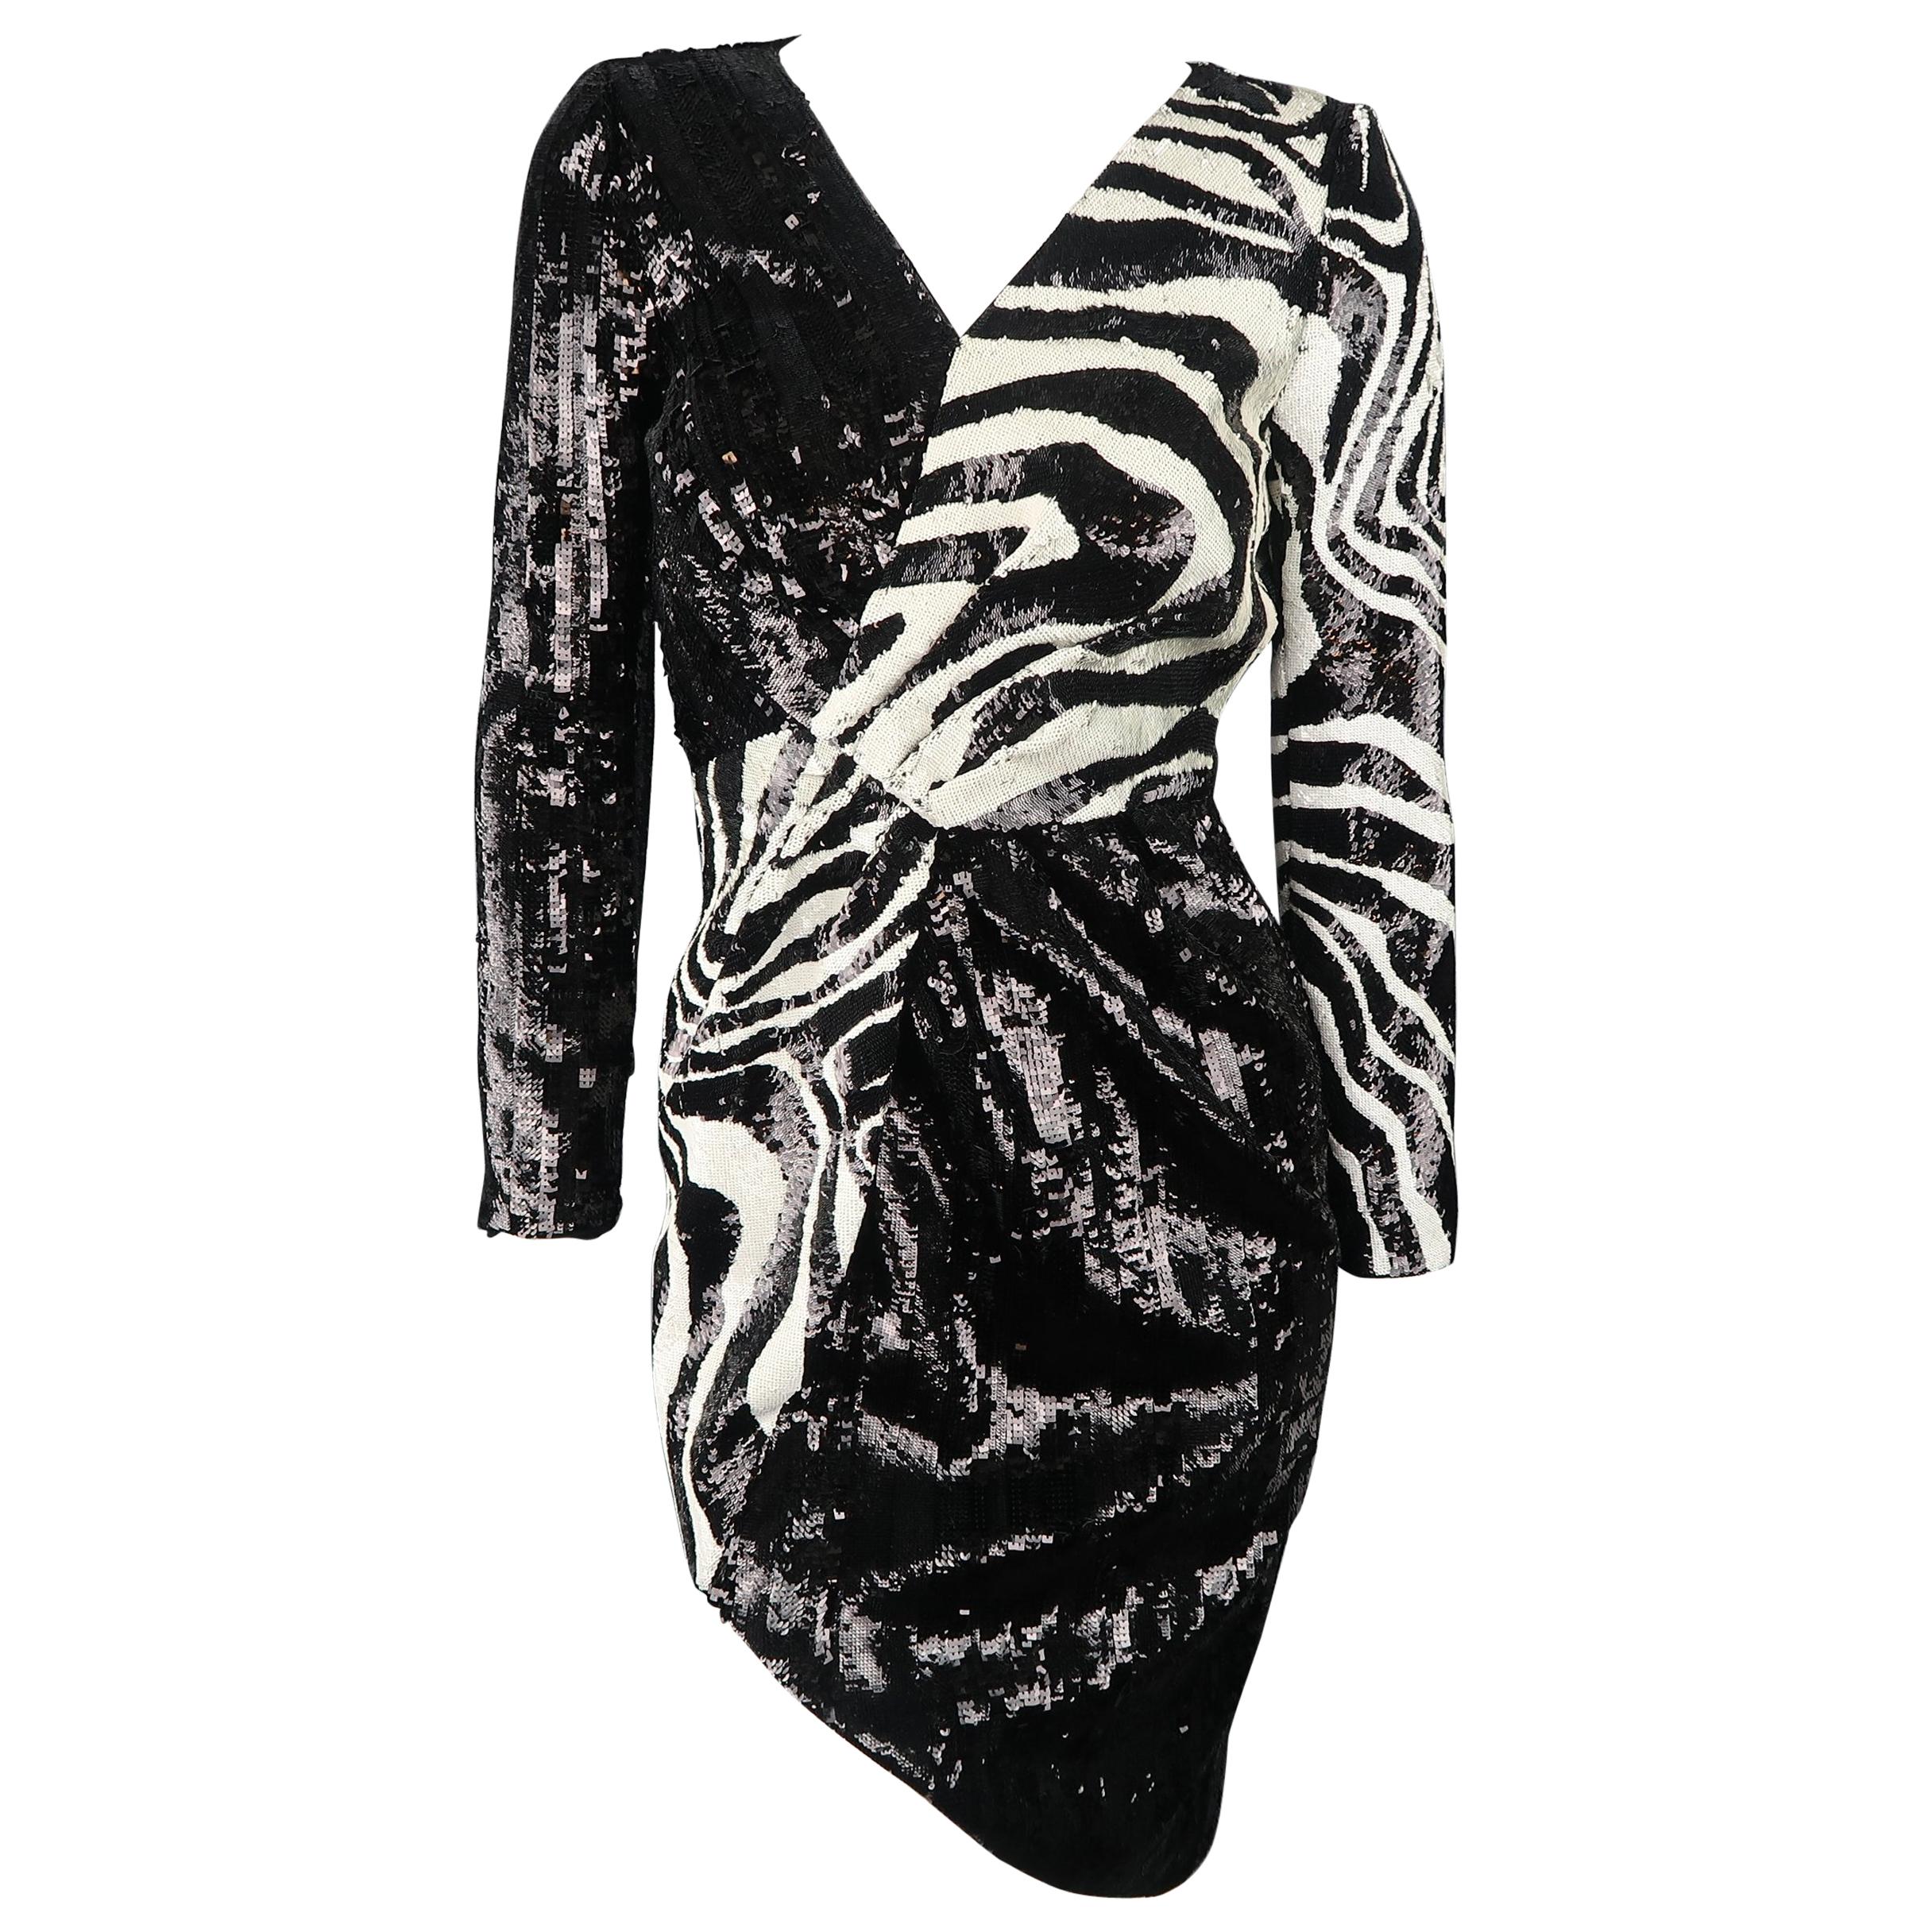 Saint Laurent Black Zebra Print Sequin Cocktail Dress, Fall 2015 Retailed $18k  